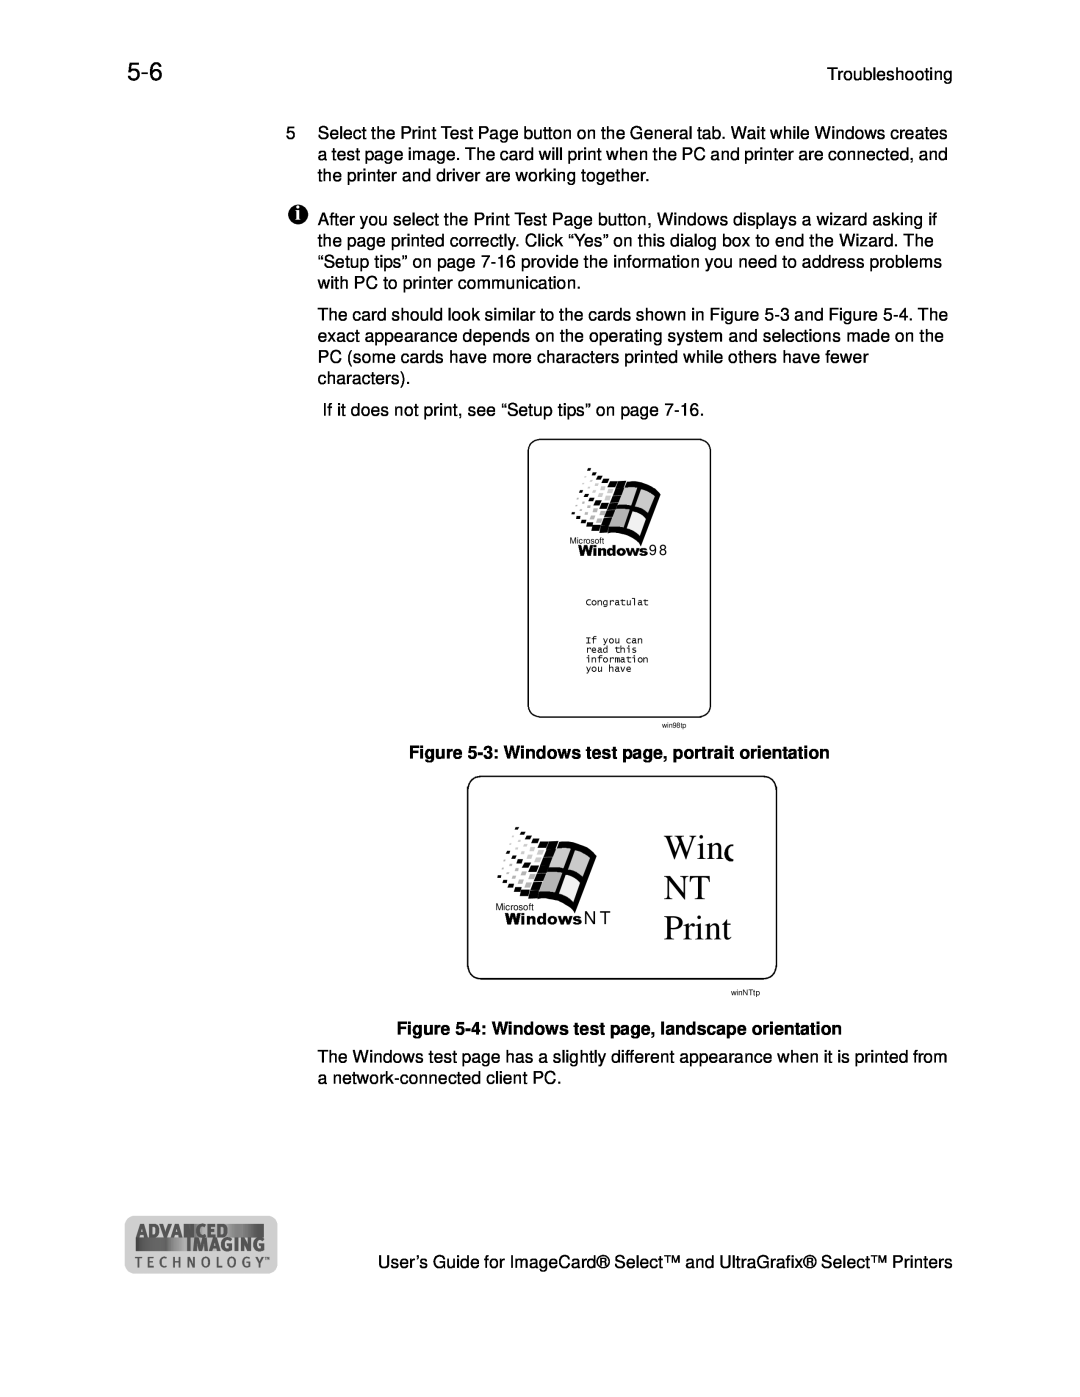 Datacard Group ImageCard SelectTM and UltraGrafix SelectTM Printers manual 3 Windows test page, portrait orientation 